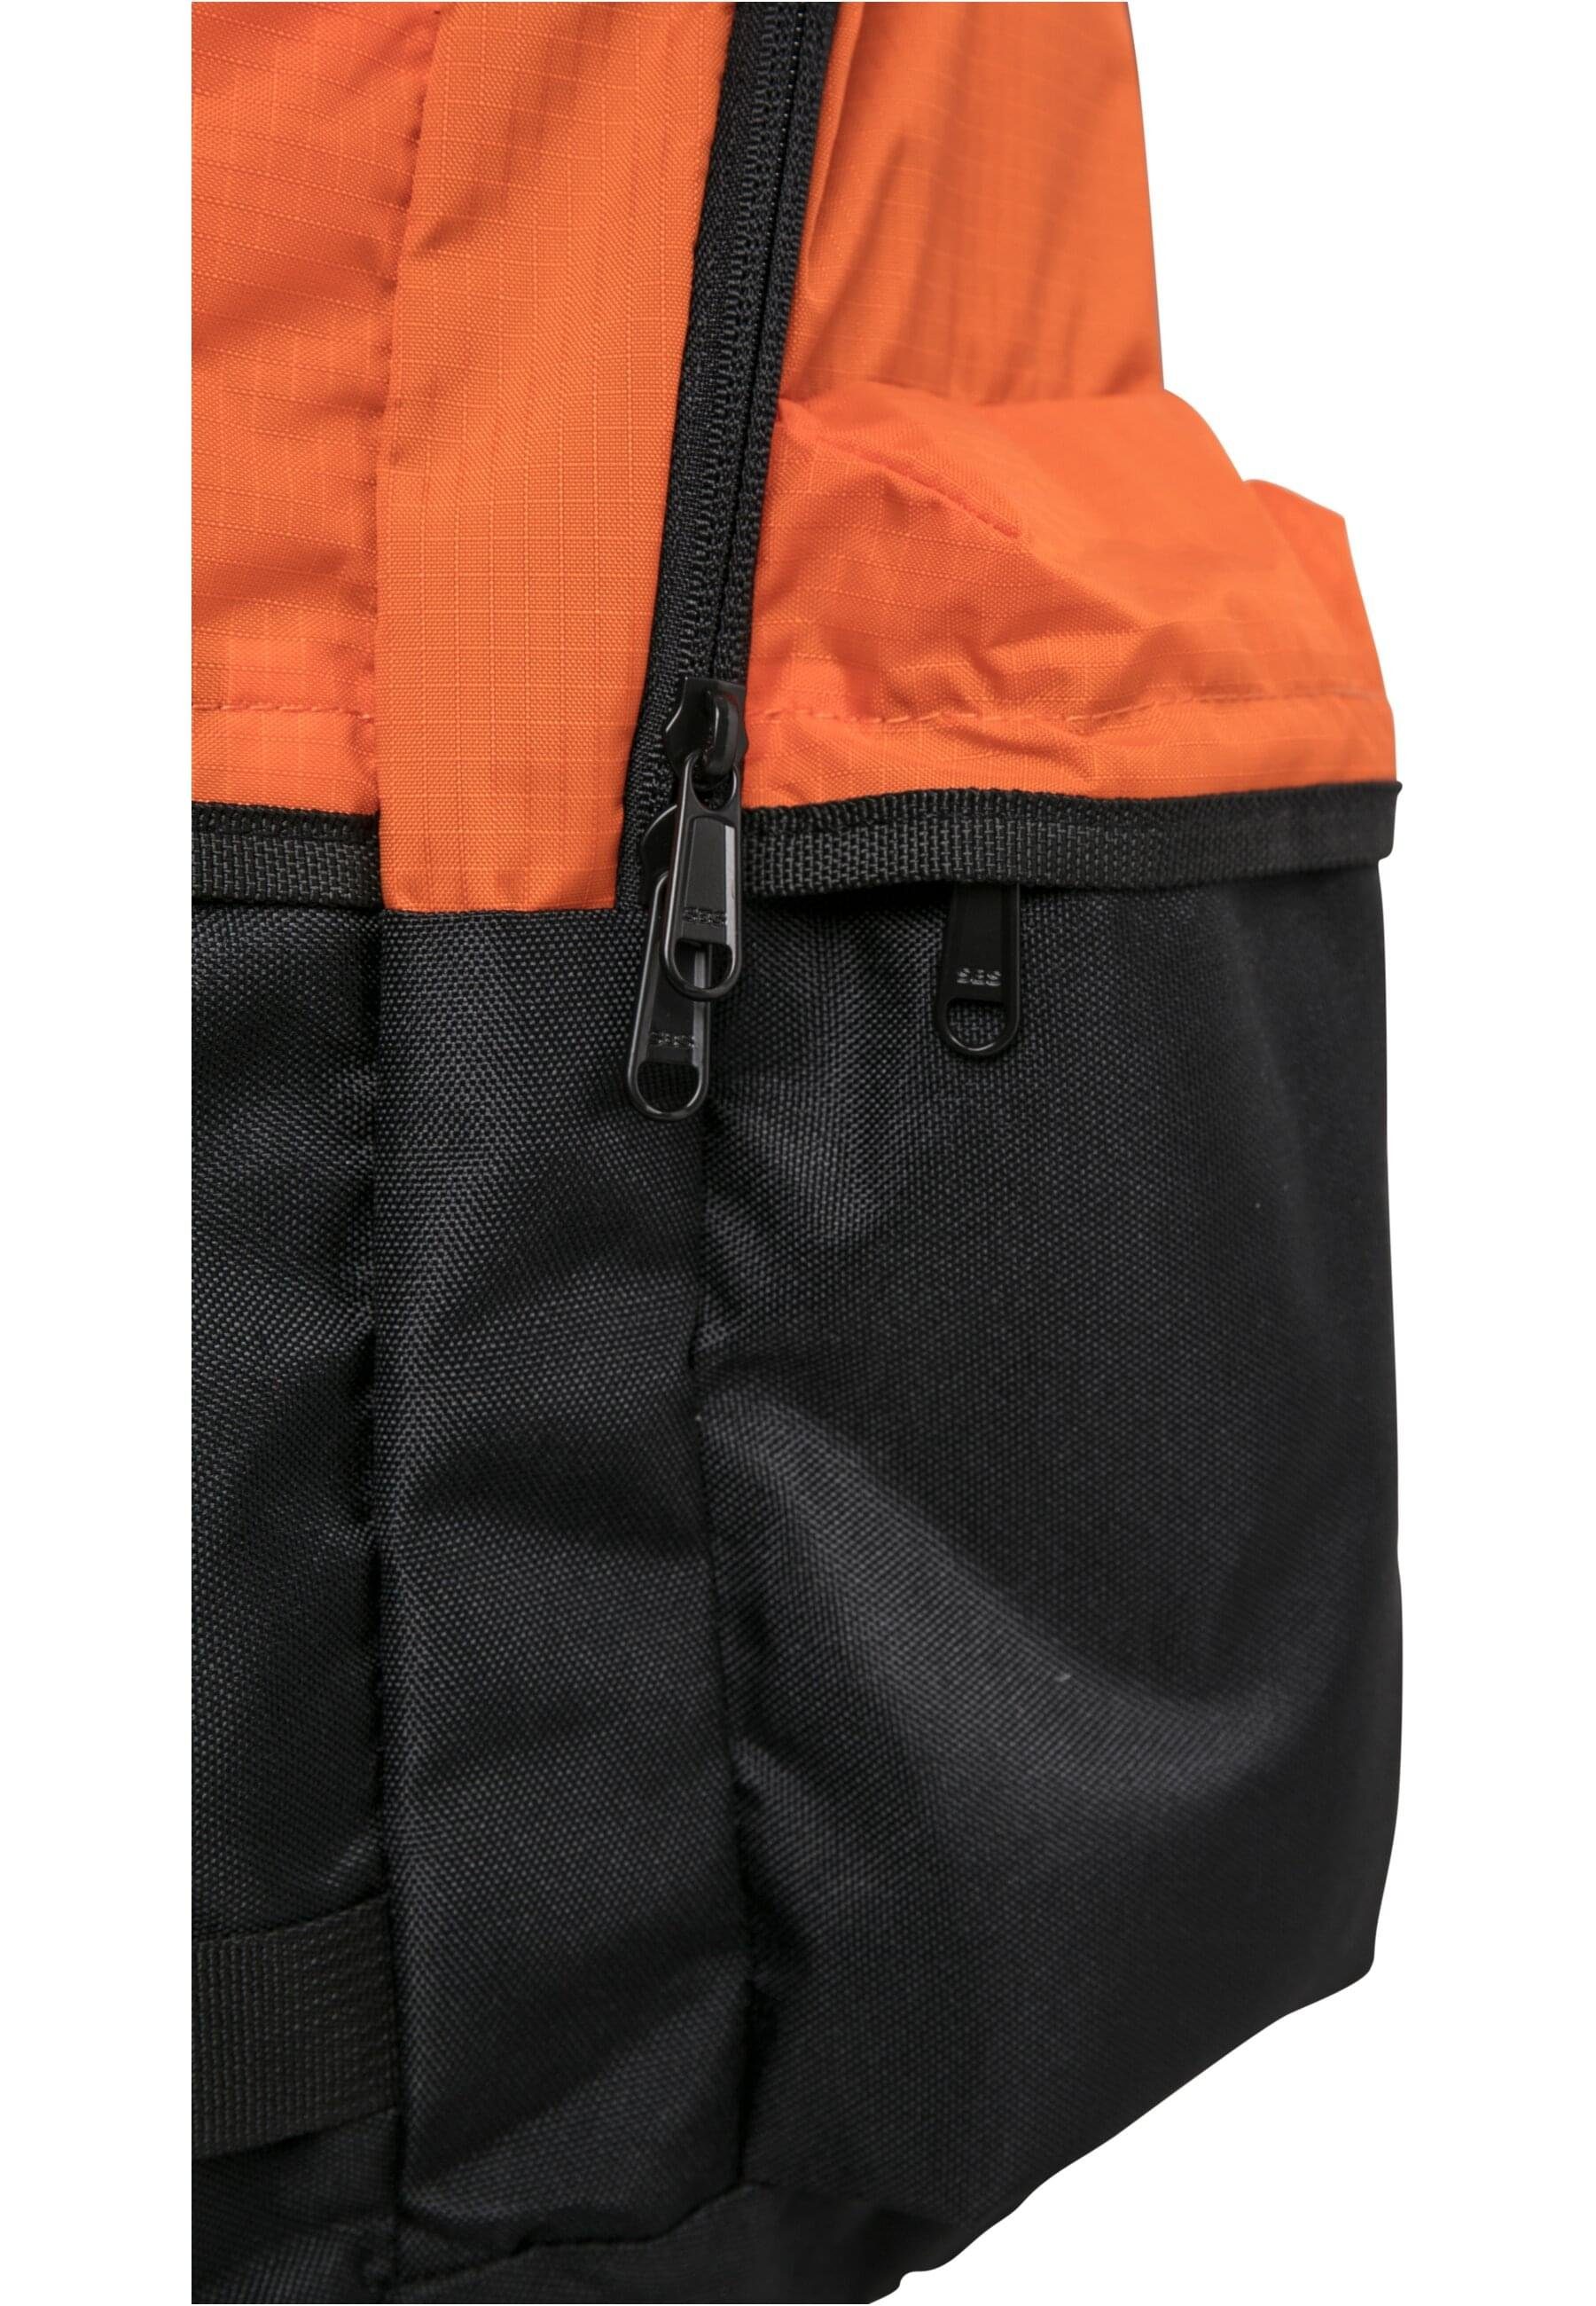 Backpack Unisex CLASSICS Colourblocking Rucksack URBAN vibrantorange/black